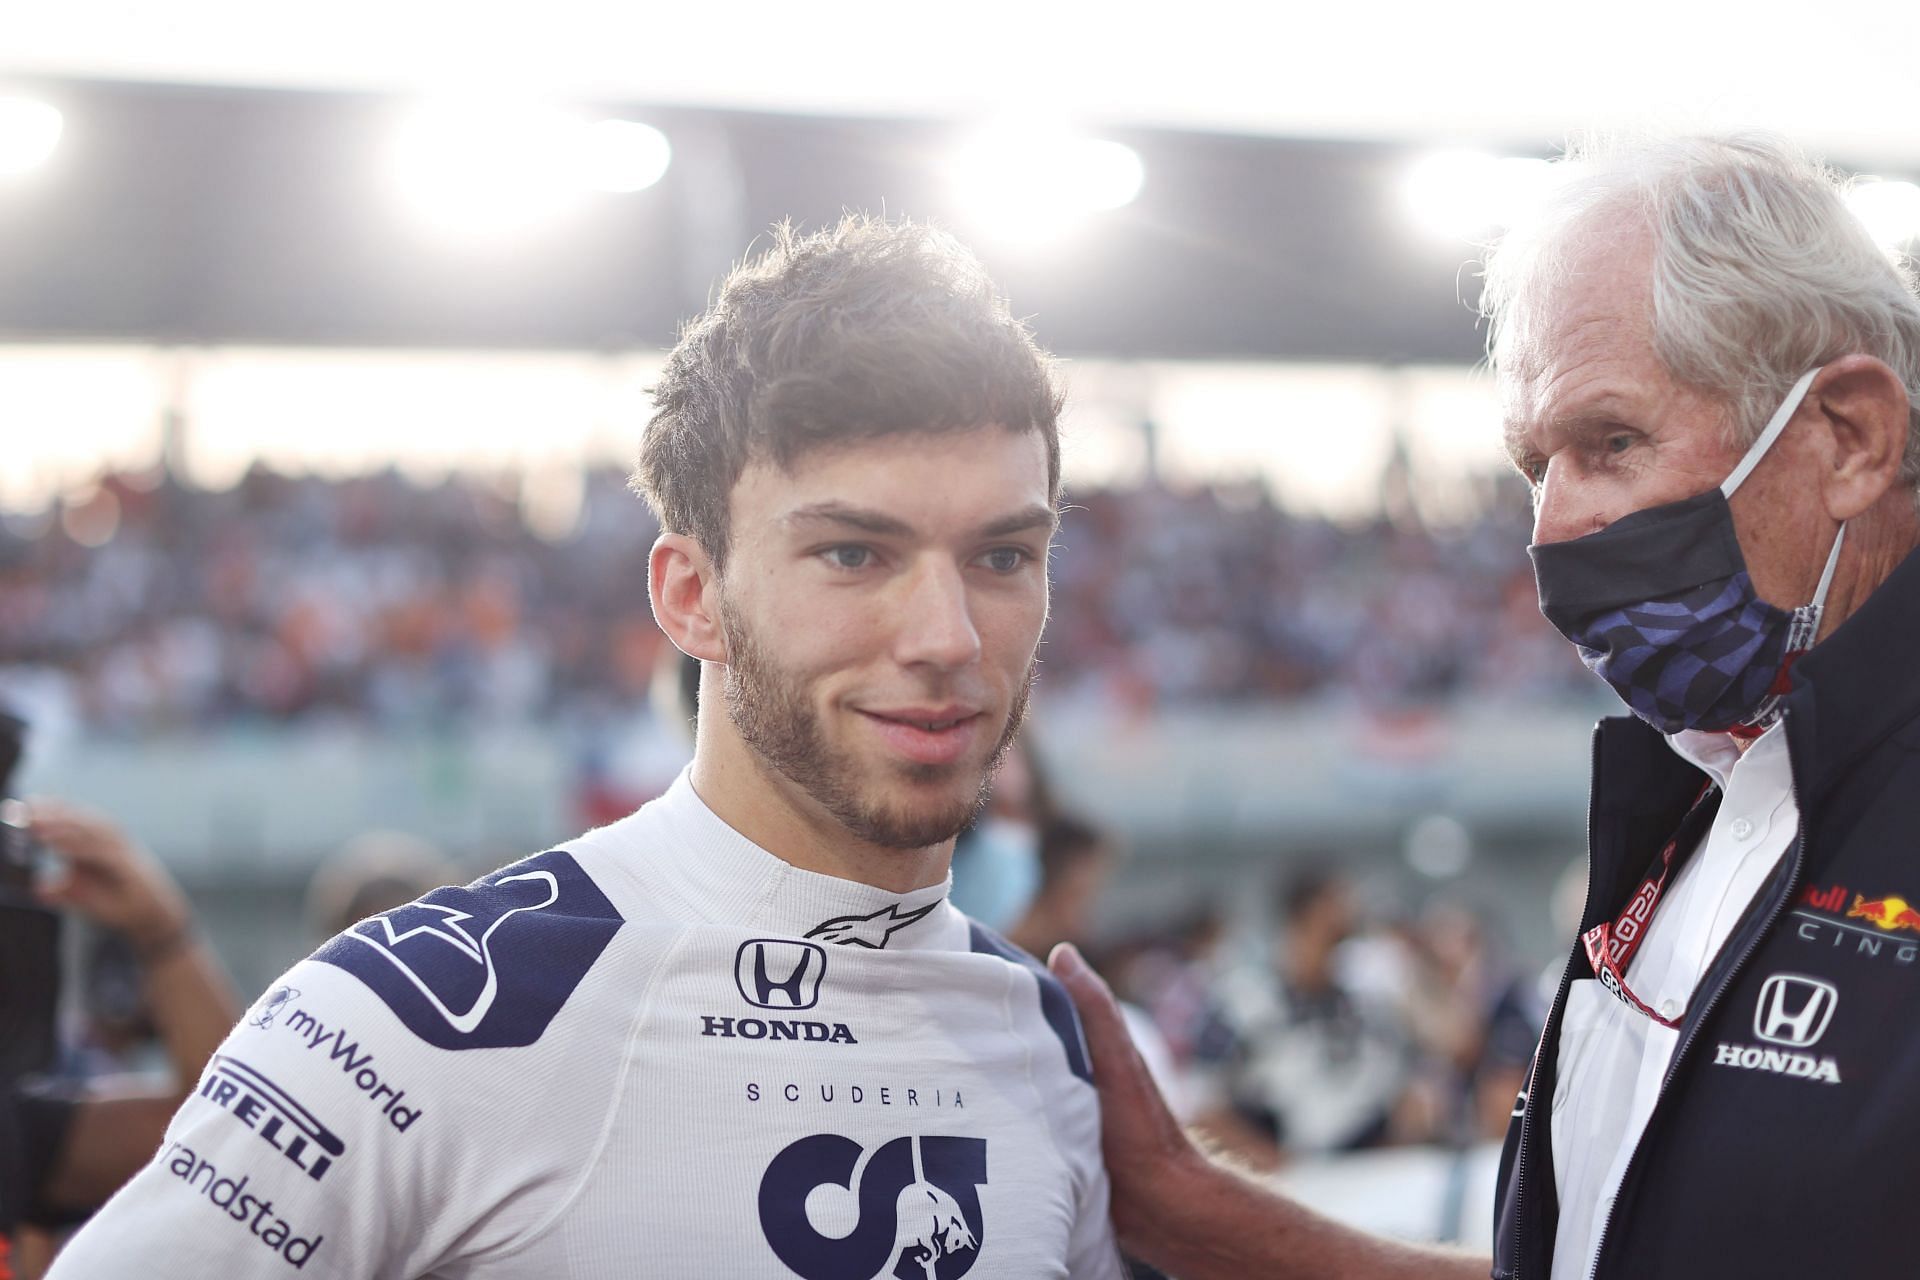 Gasly and Helmut Marko at the F1 Grand Prix of Qatar